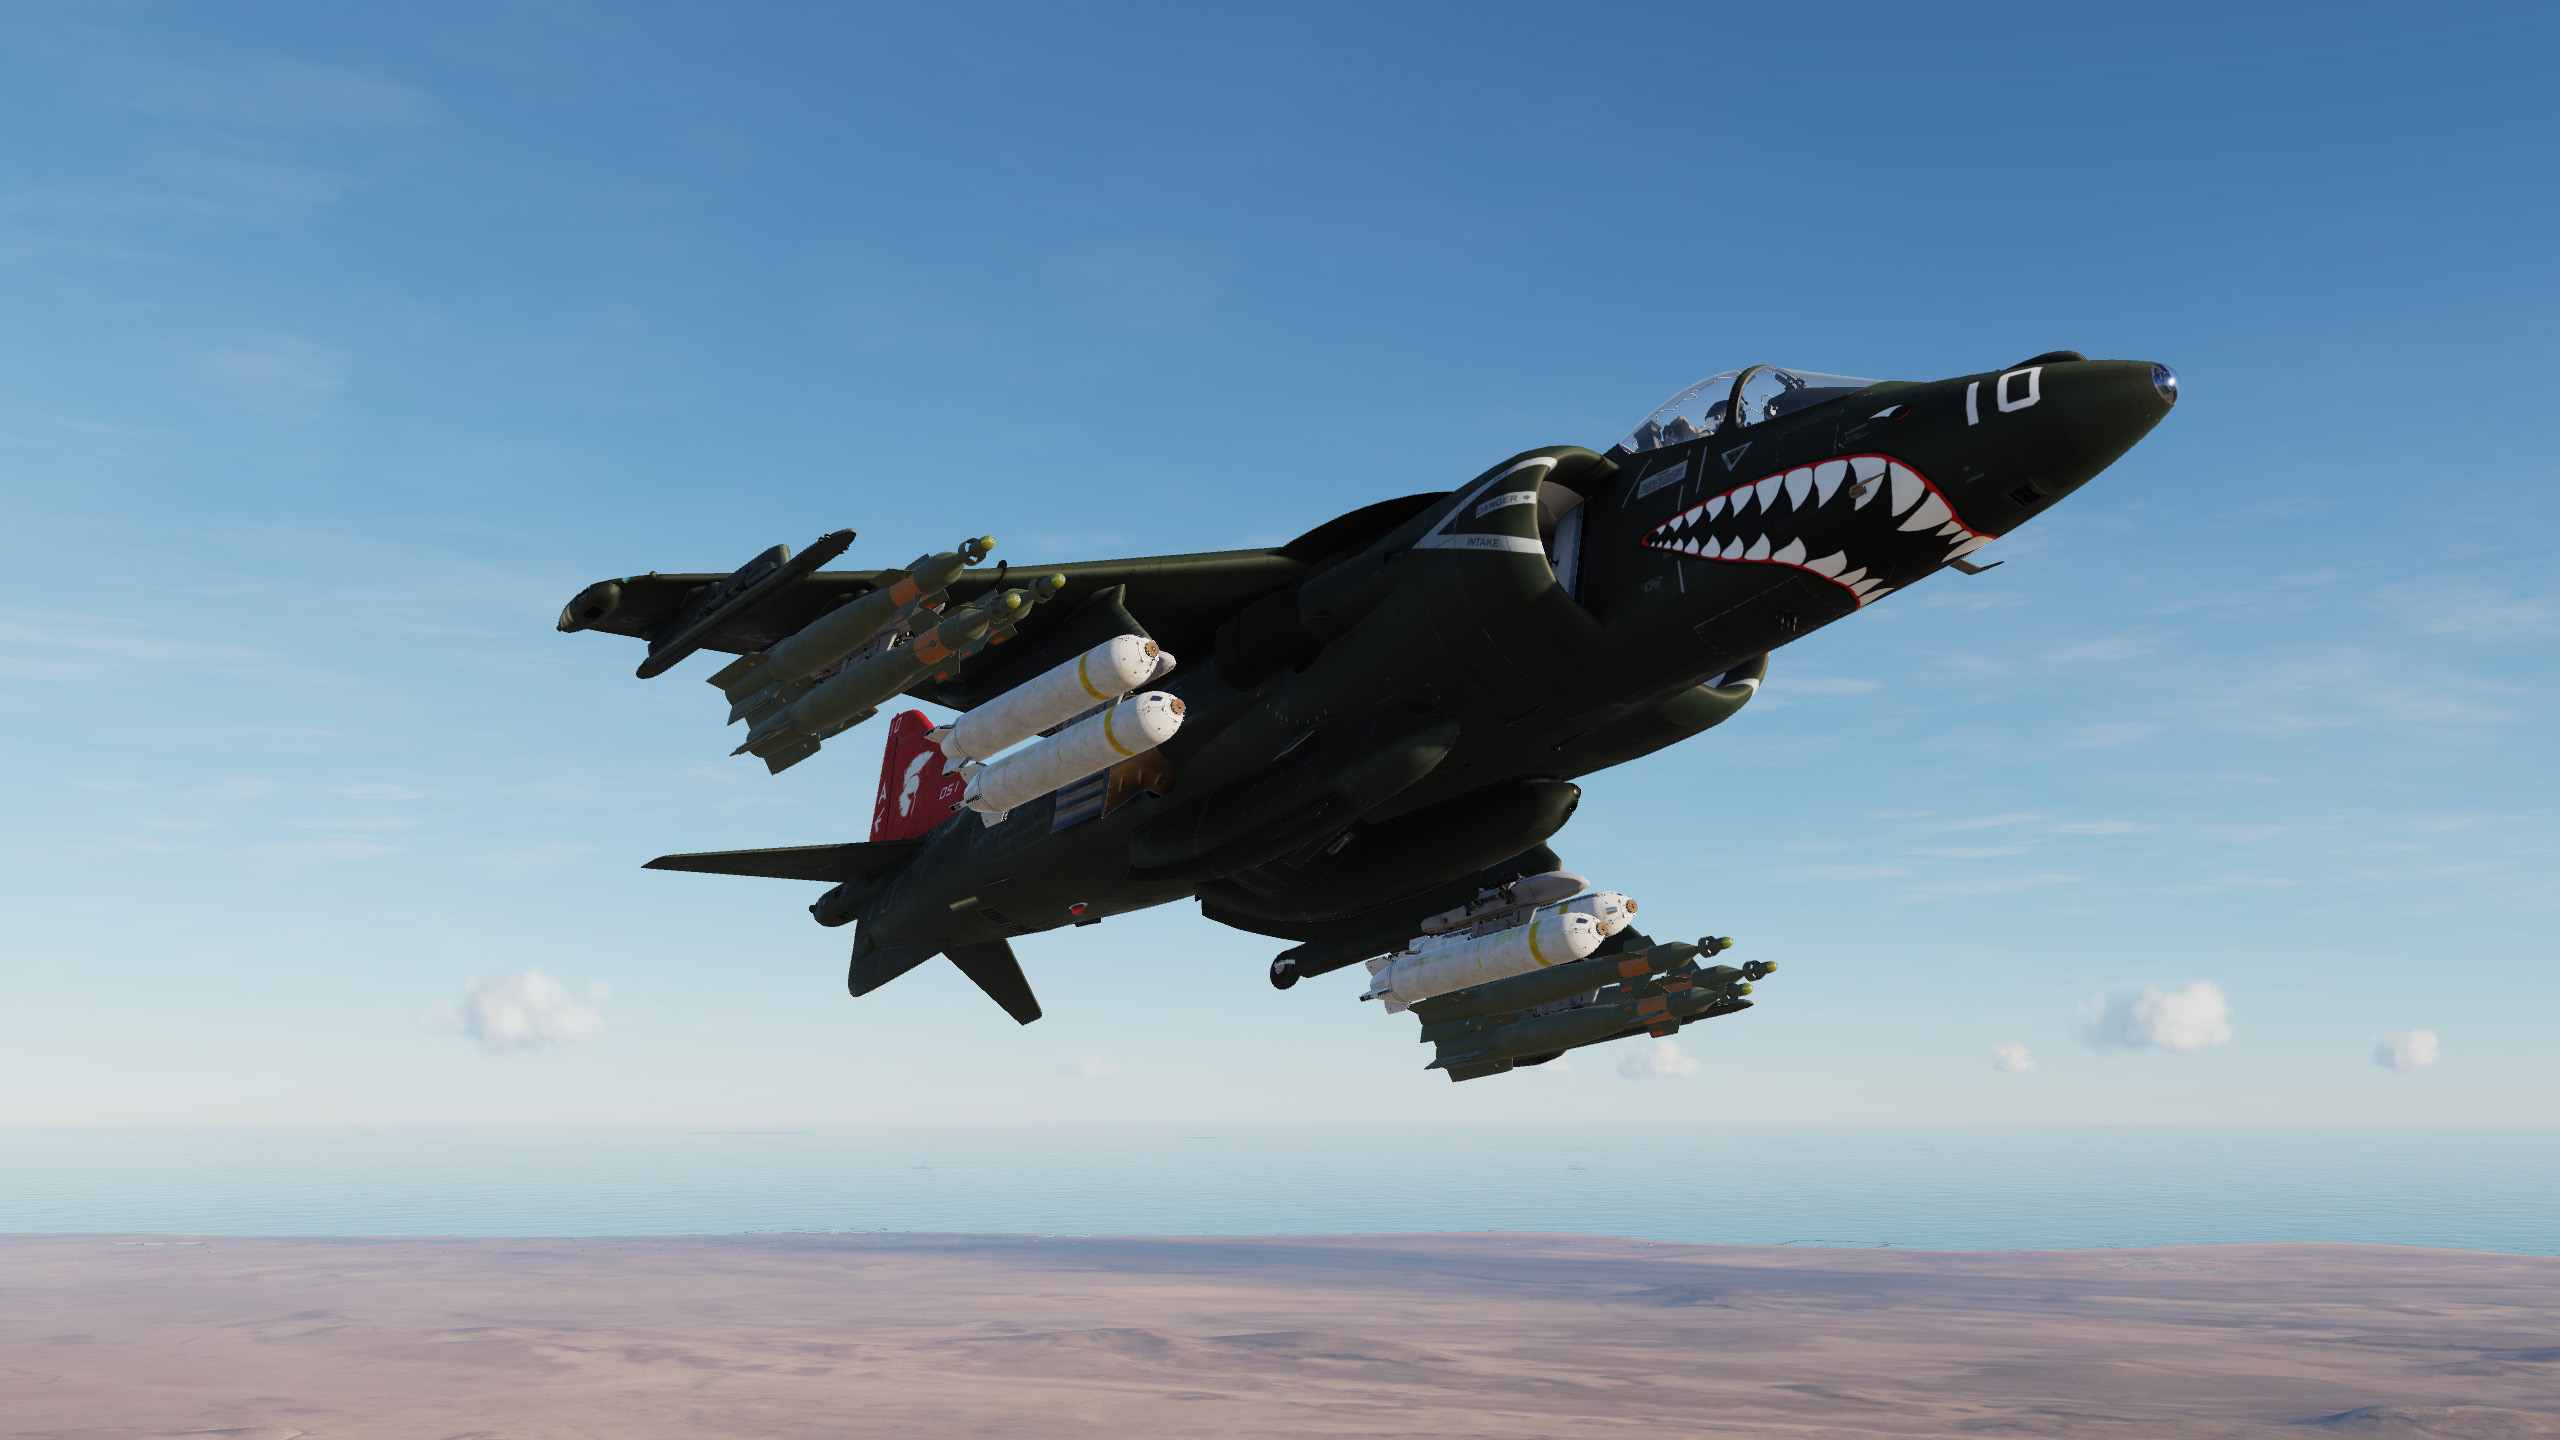 Shark Fighter Jet